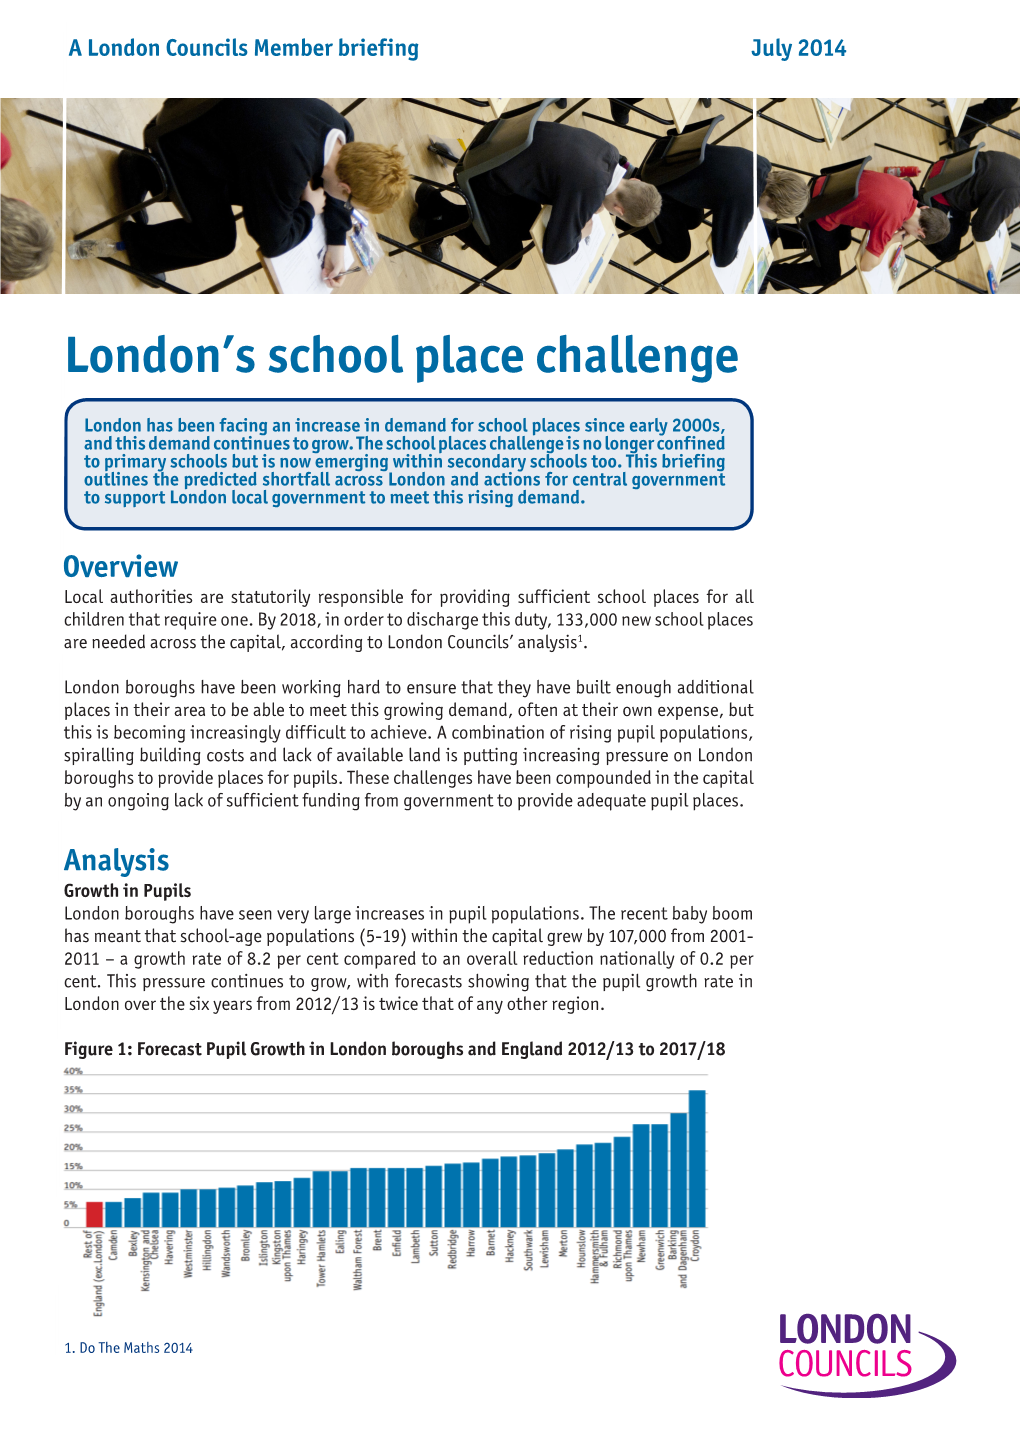 London's School Place Challenge